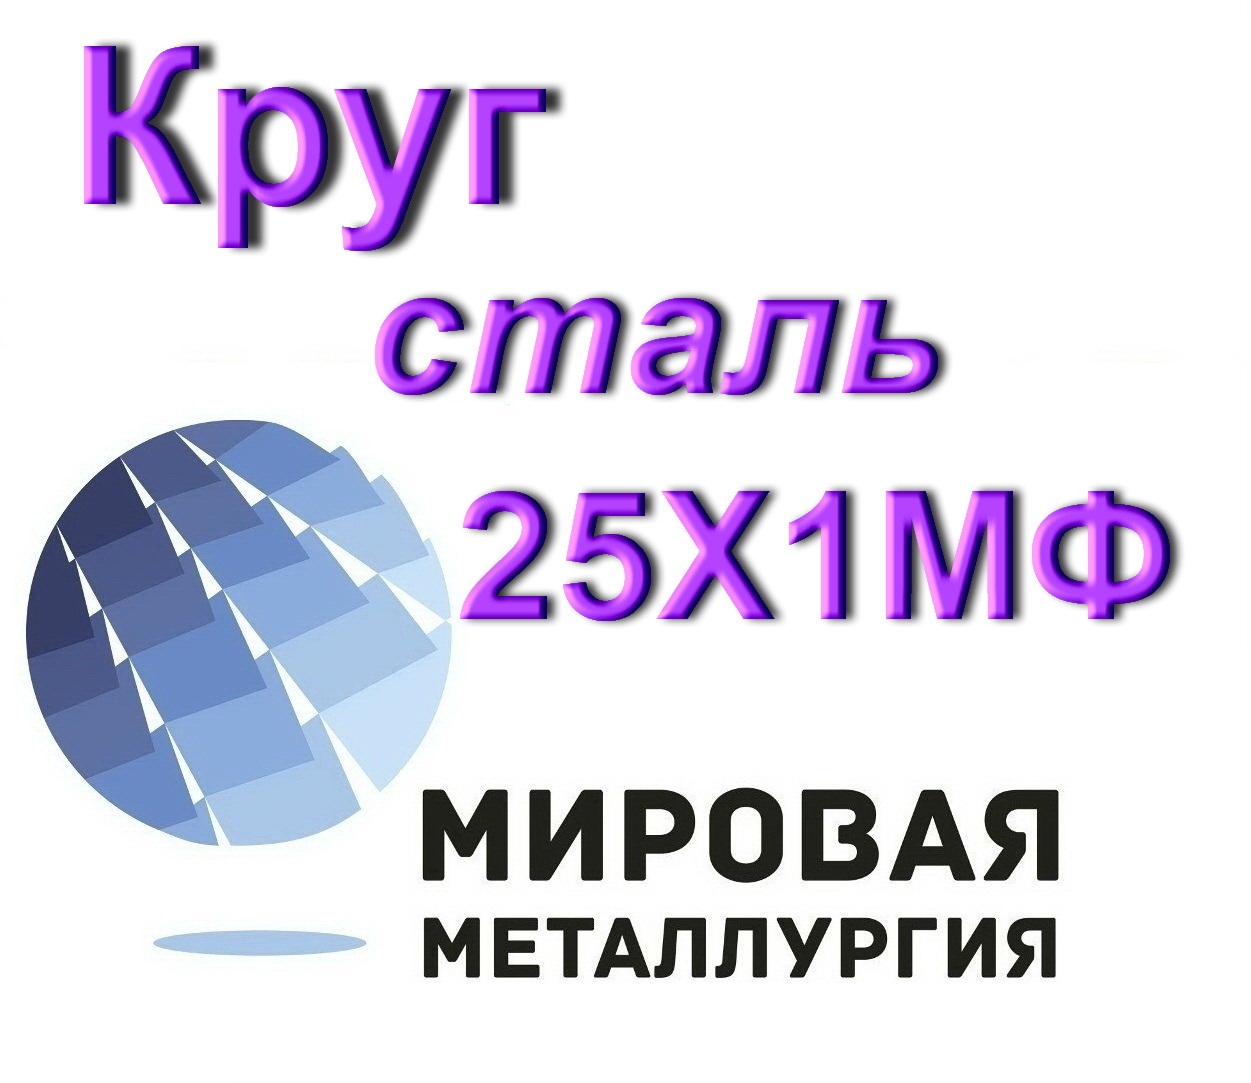 Круг сталь 25Х1МФ в городе Екатеринбург, фото 1, телефон продавца: +7 (343) 202-21-64